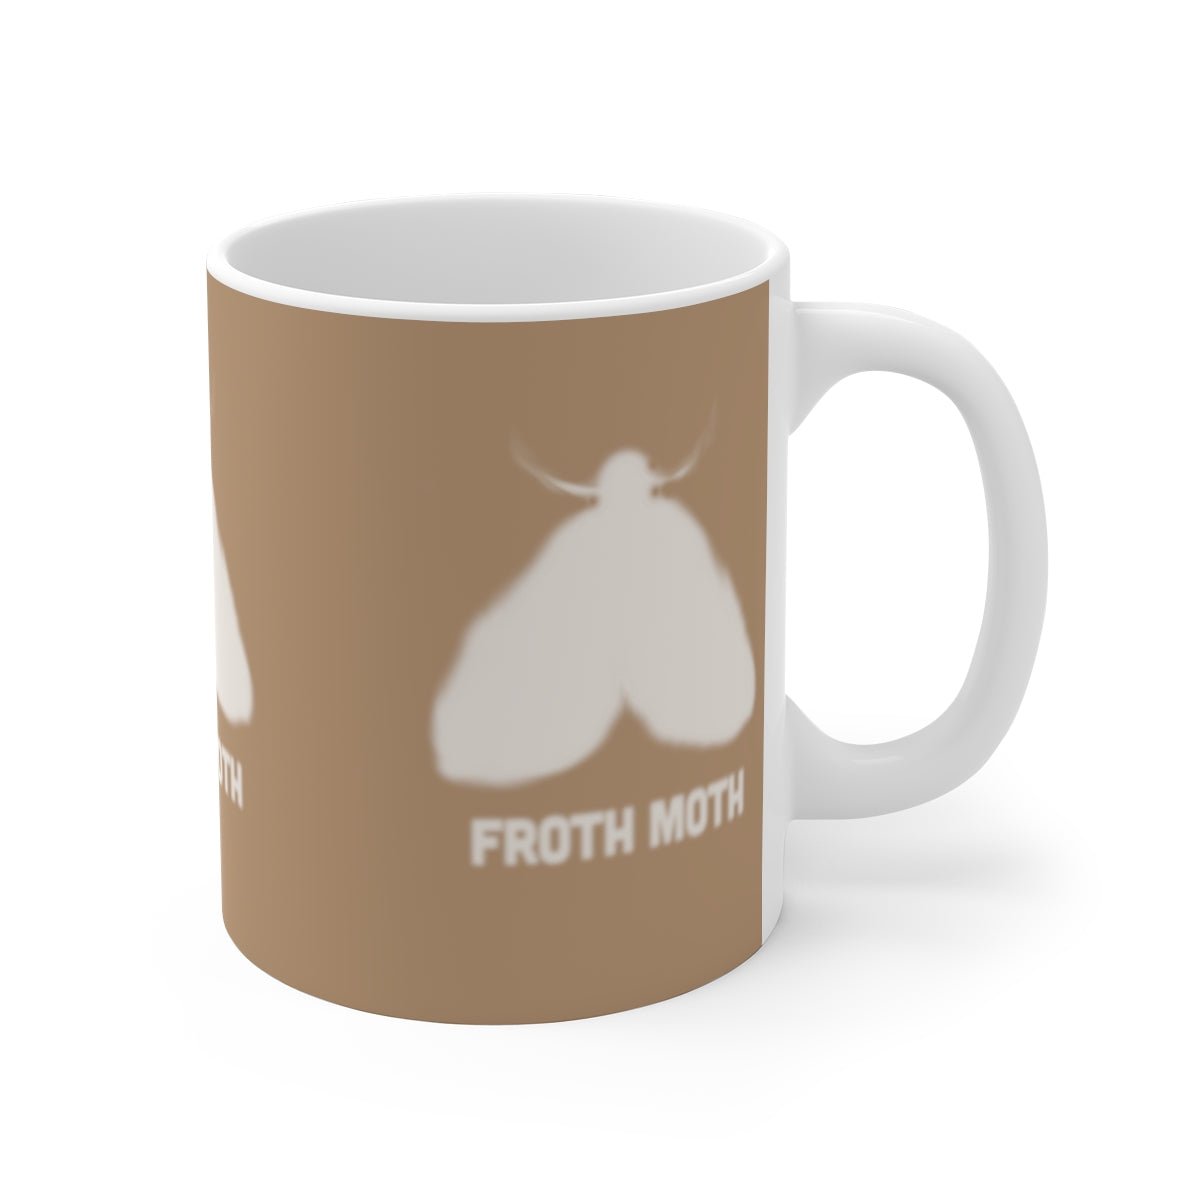 Froth Moth Coffee mug for foam lovers Mug 11oz chai latte cappuccino macchiato